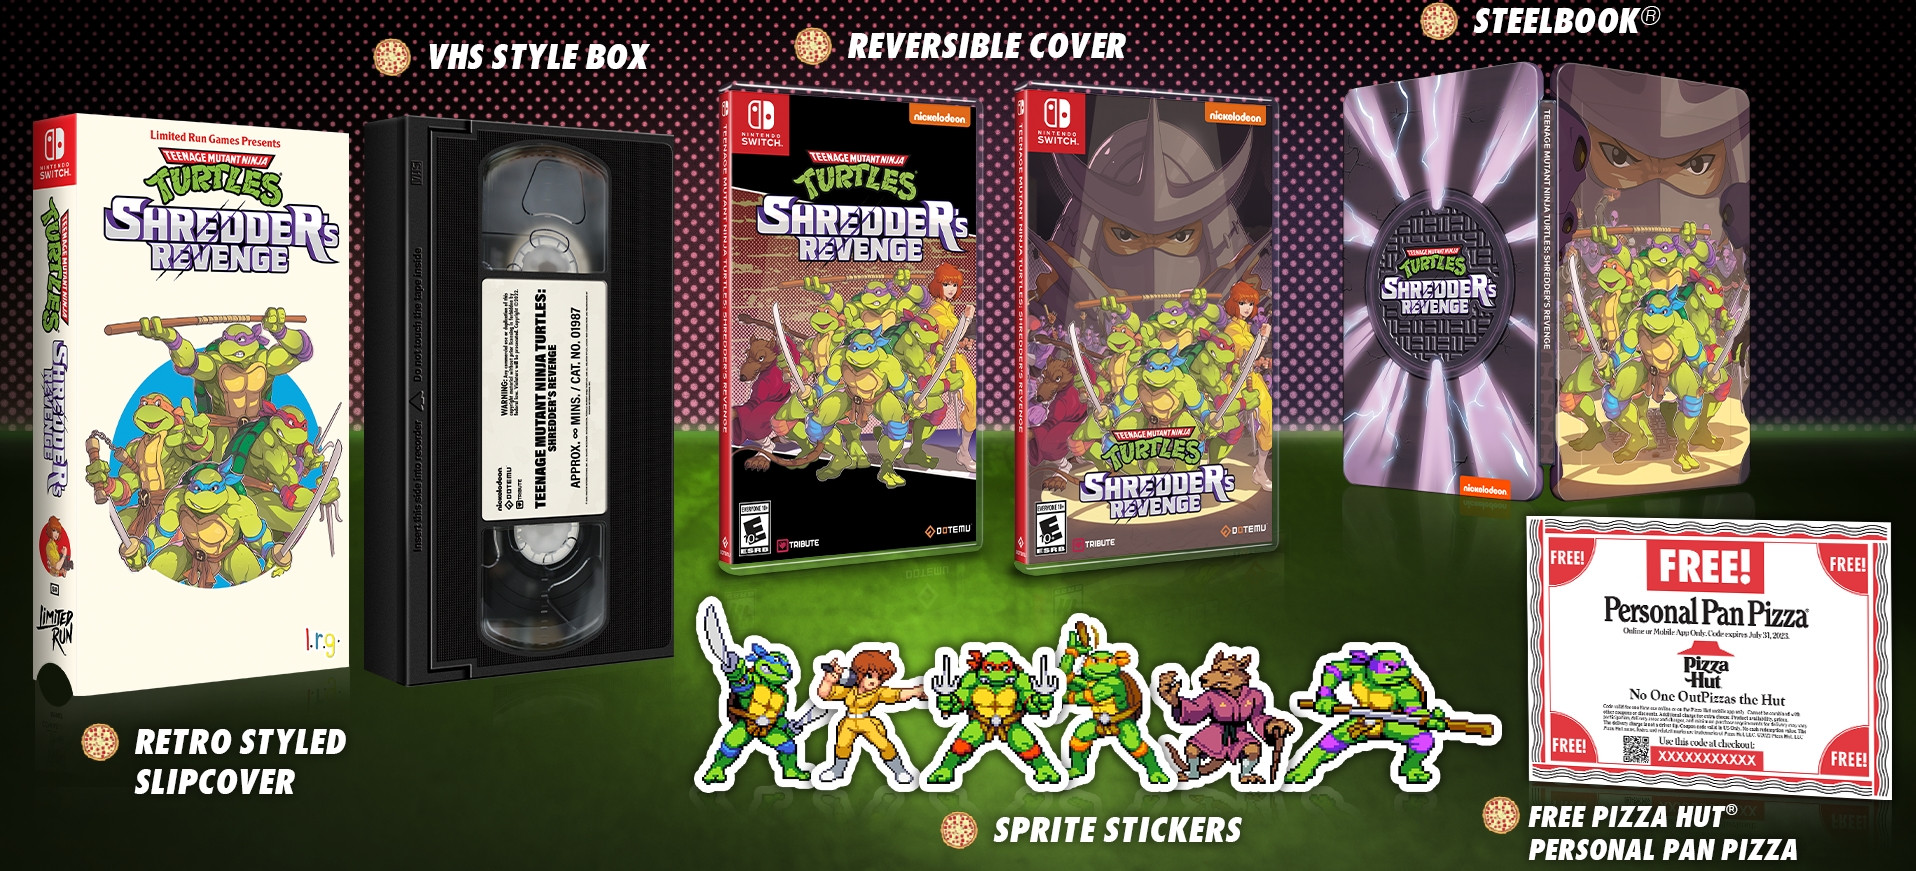 Teenage Mutant Ninja Turtles Shredder's Revenge Classic Edition (Limited Run Games)